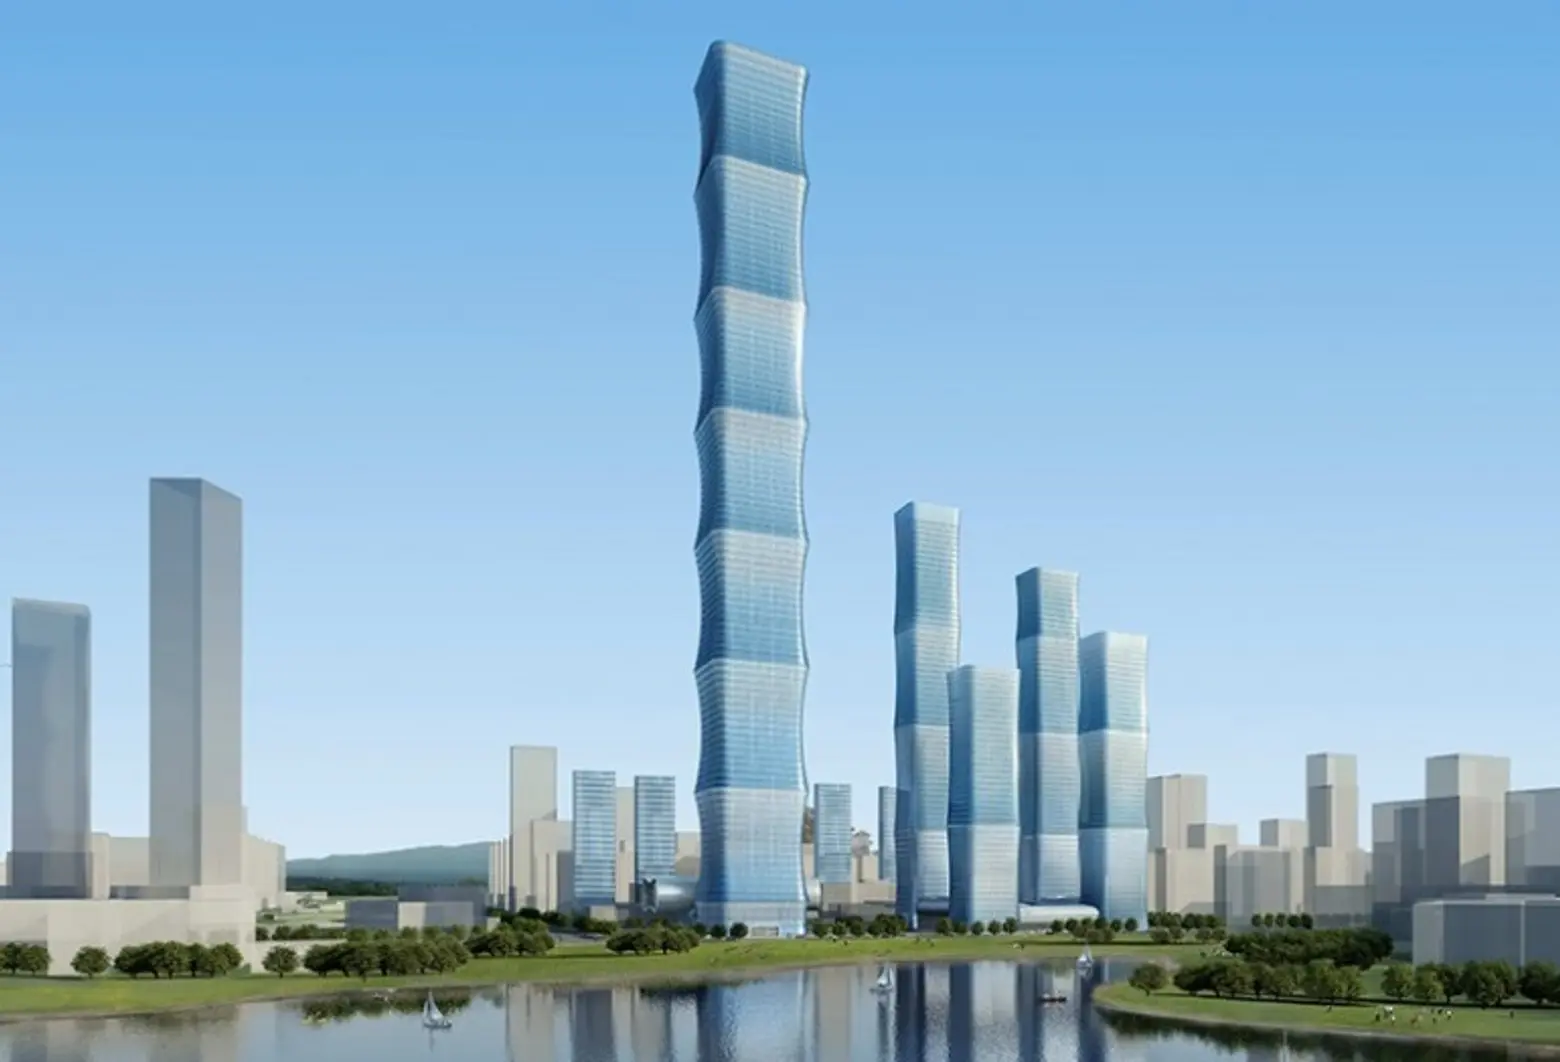 Evergrande International Finance Center proposed for Hefei China